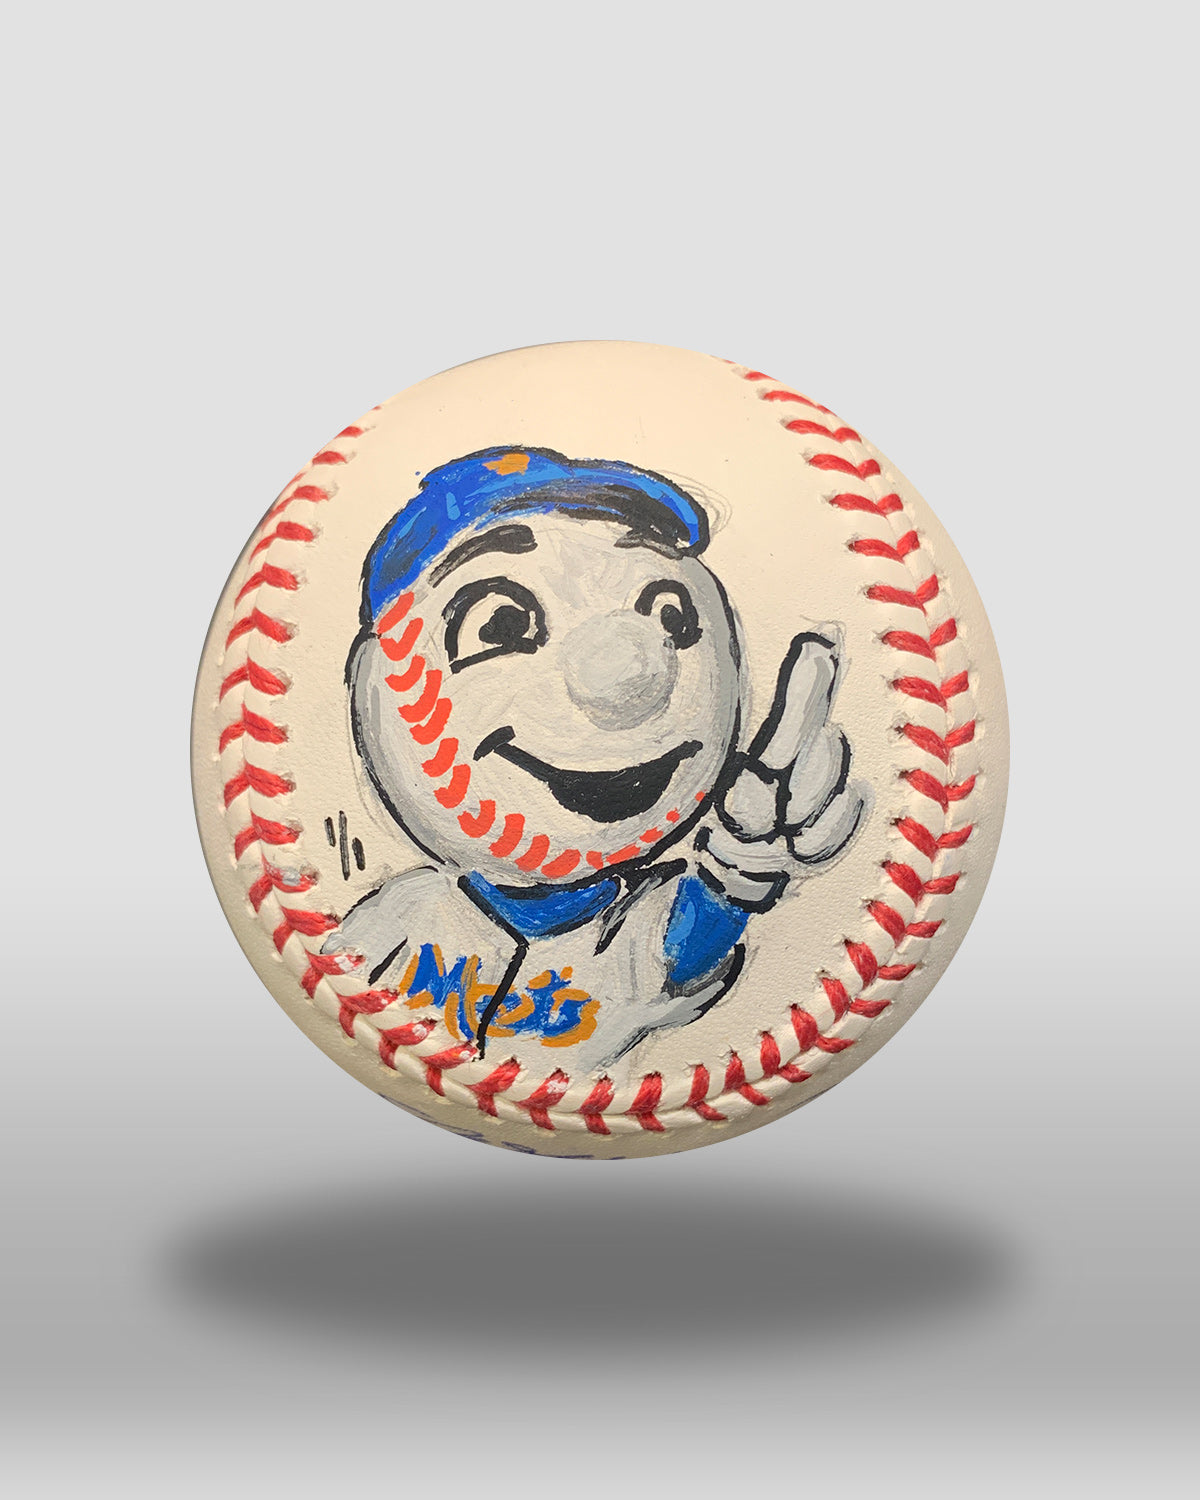 Mr. Met Hand-Painted Baseball Art